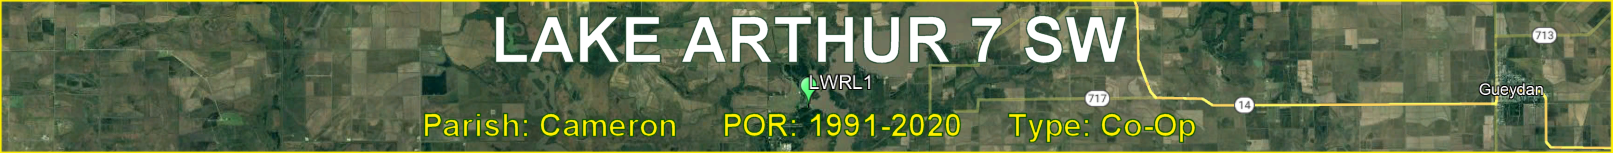 Title image for Lake Arthur 7 SW